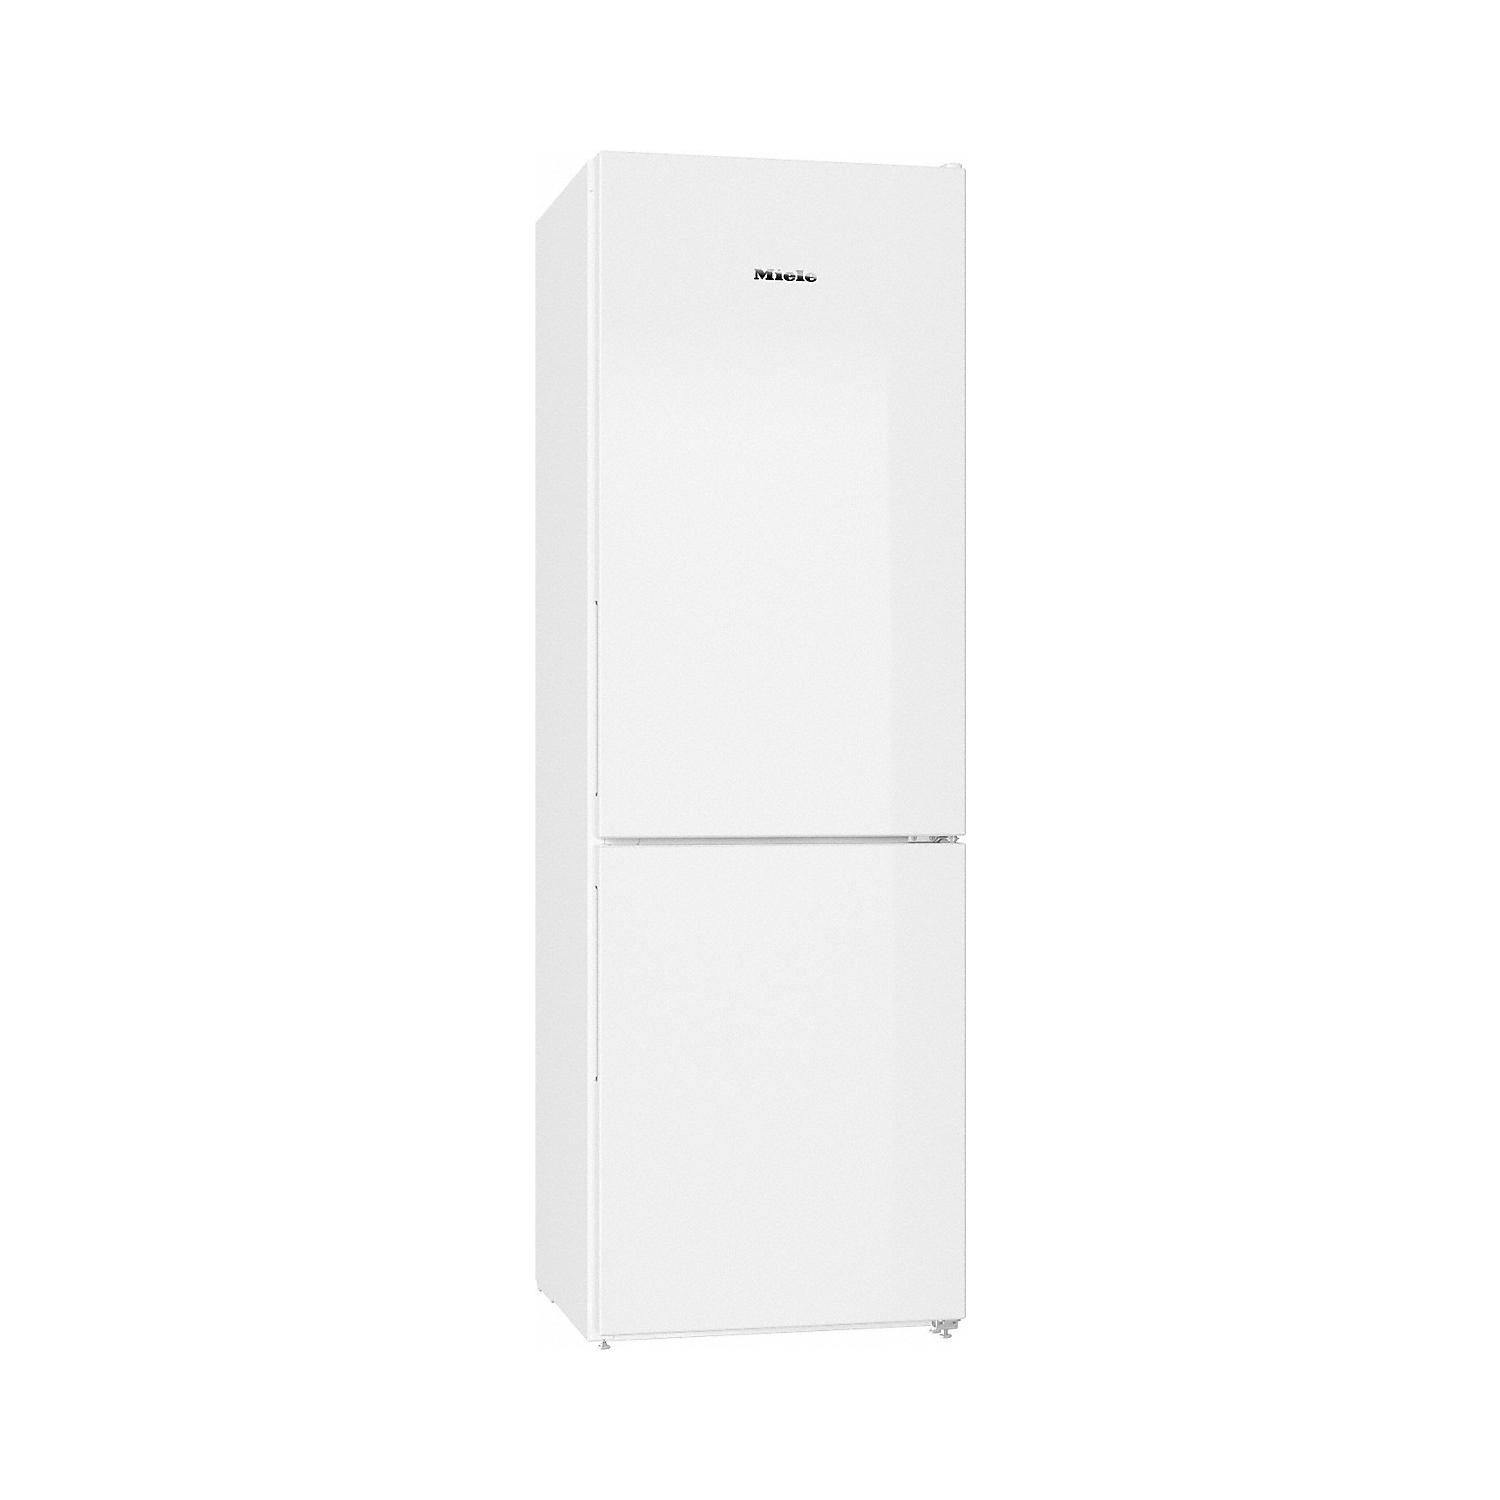 Miele Freestanding Fridge Freezer, 60cm Wide, White  ***£100 CASH-BACK UNTIL SEPT. 5TH *** - 0